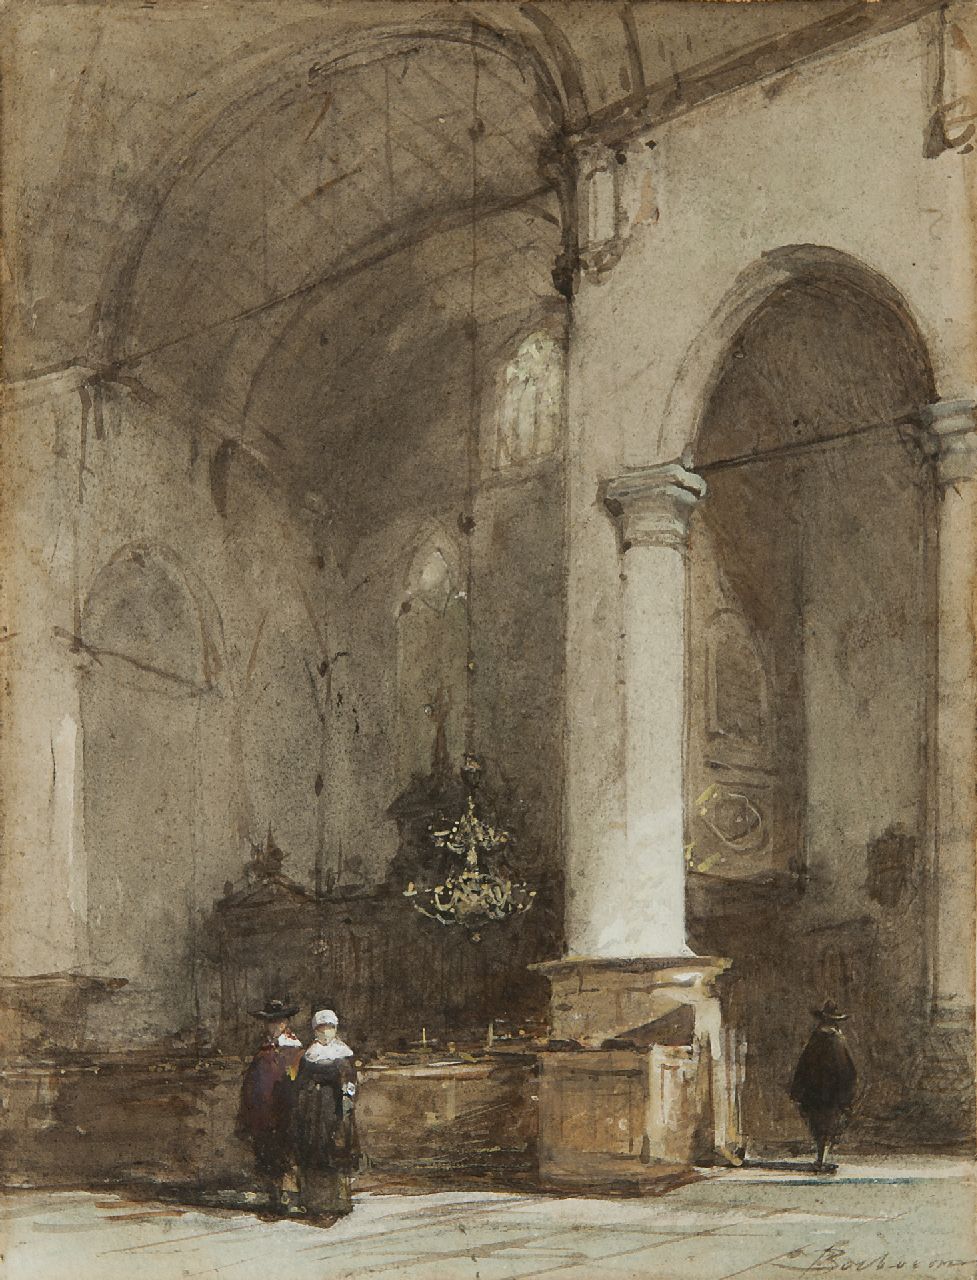 Bosboom J.  | Johannes Bosboom, Interior of the Grote Kerk, Maassluis, watercolour on paper 28.0 x 21.5 cm, signed l.r.